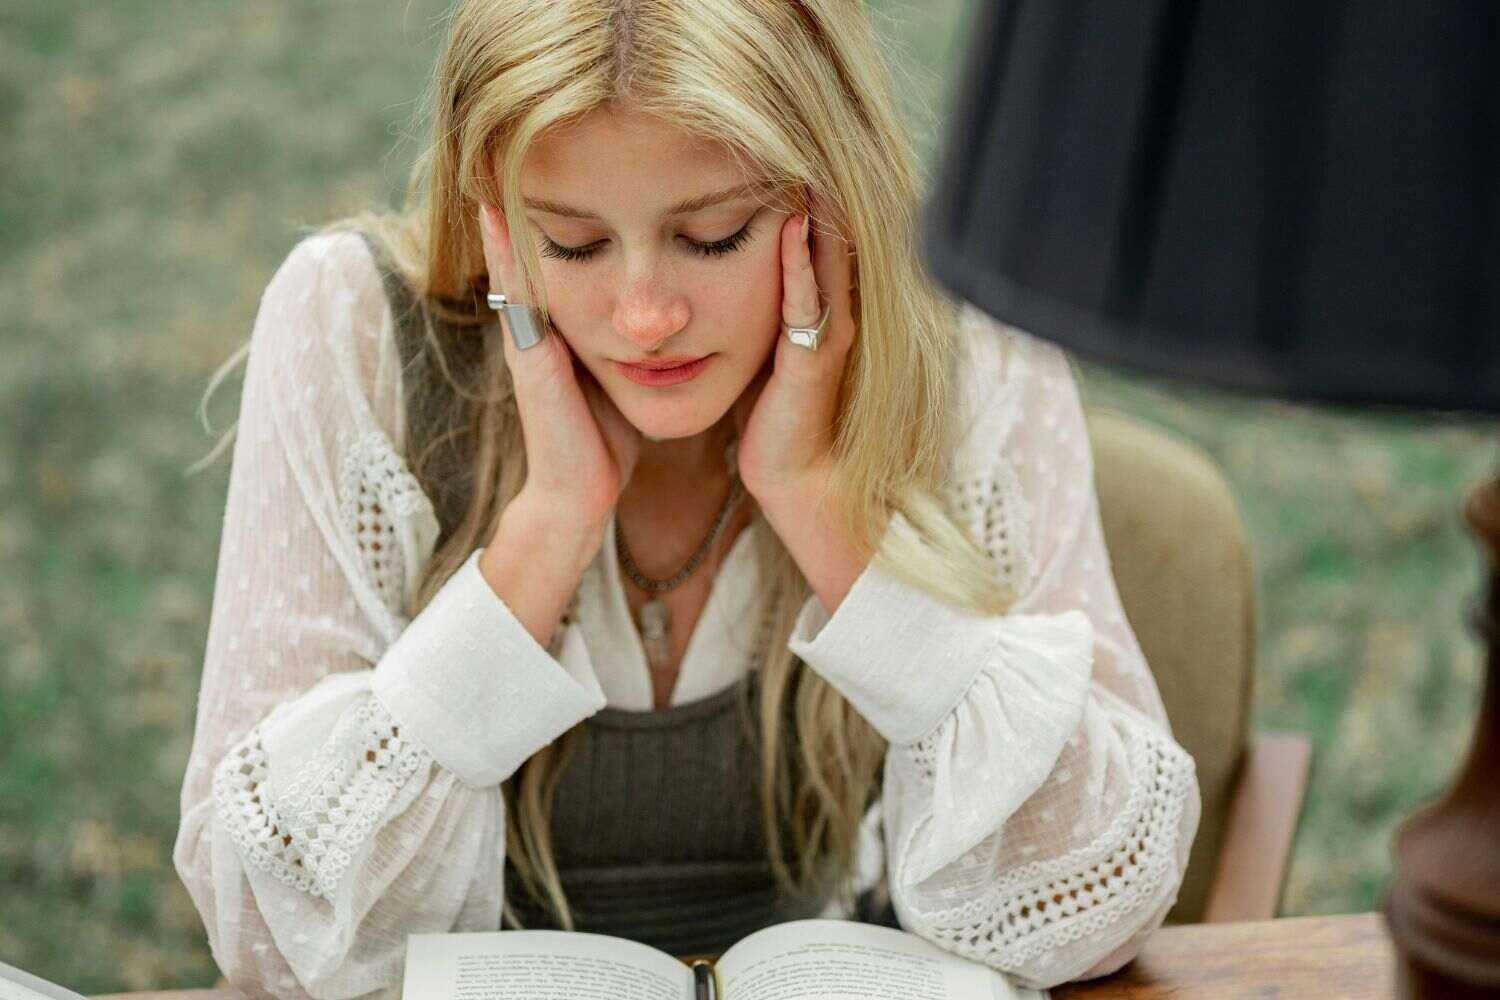 a photo of a cute girl reading a book